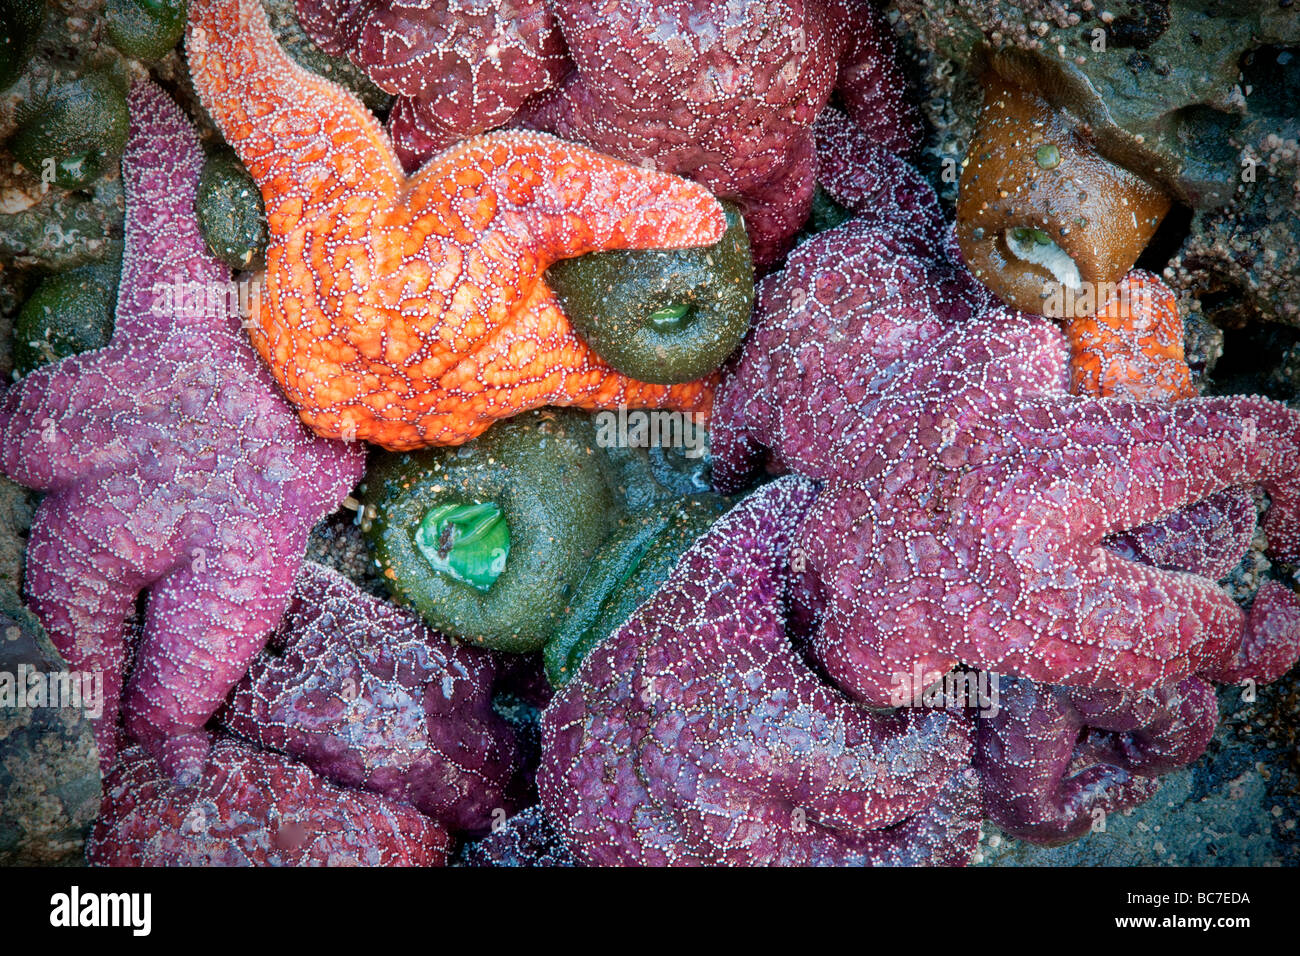 Seesterne und Seeanemonen bei Ebbe Bandon Strand Oregon Stockfoto